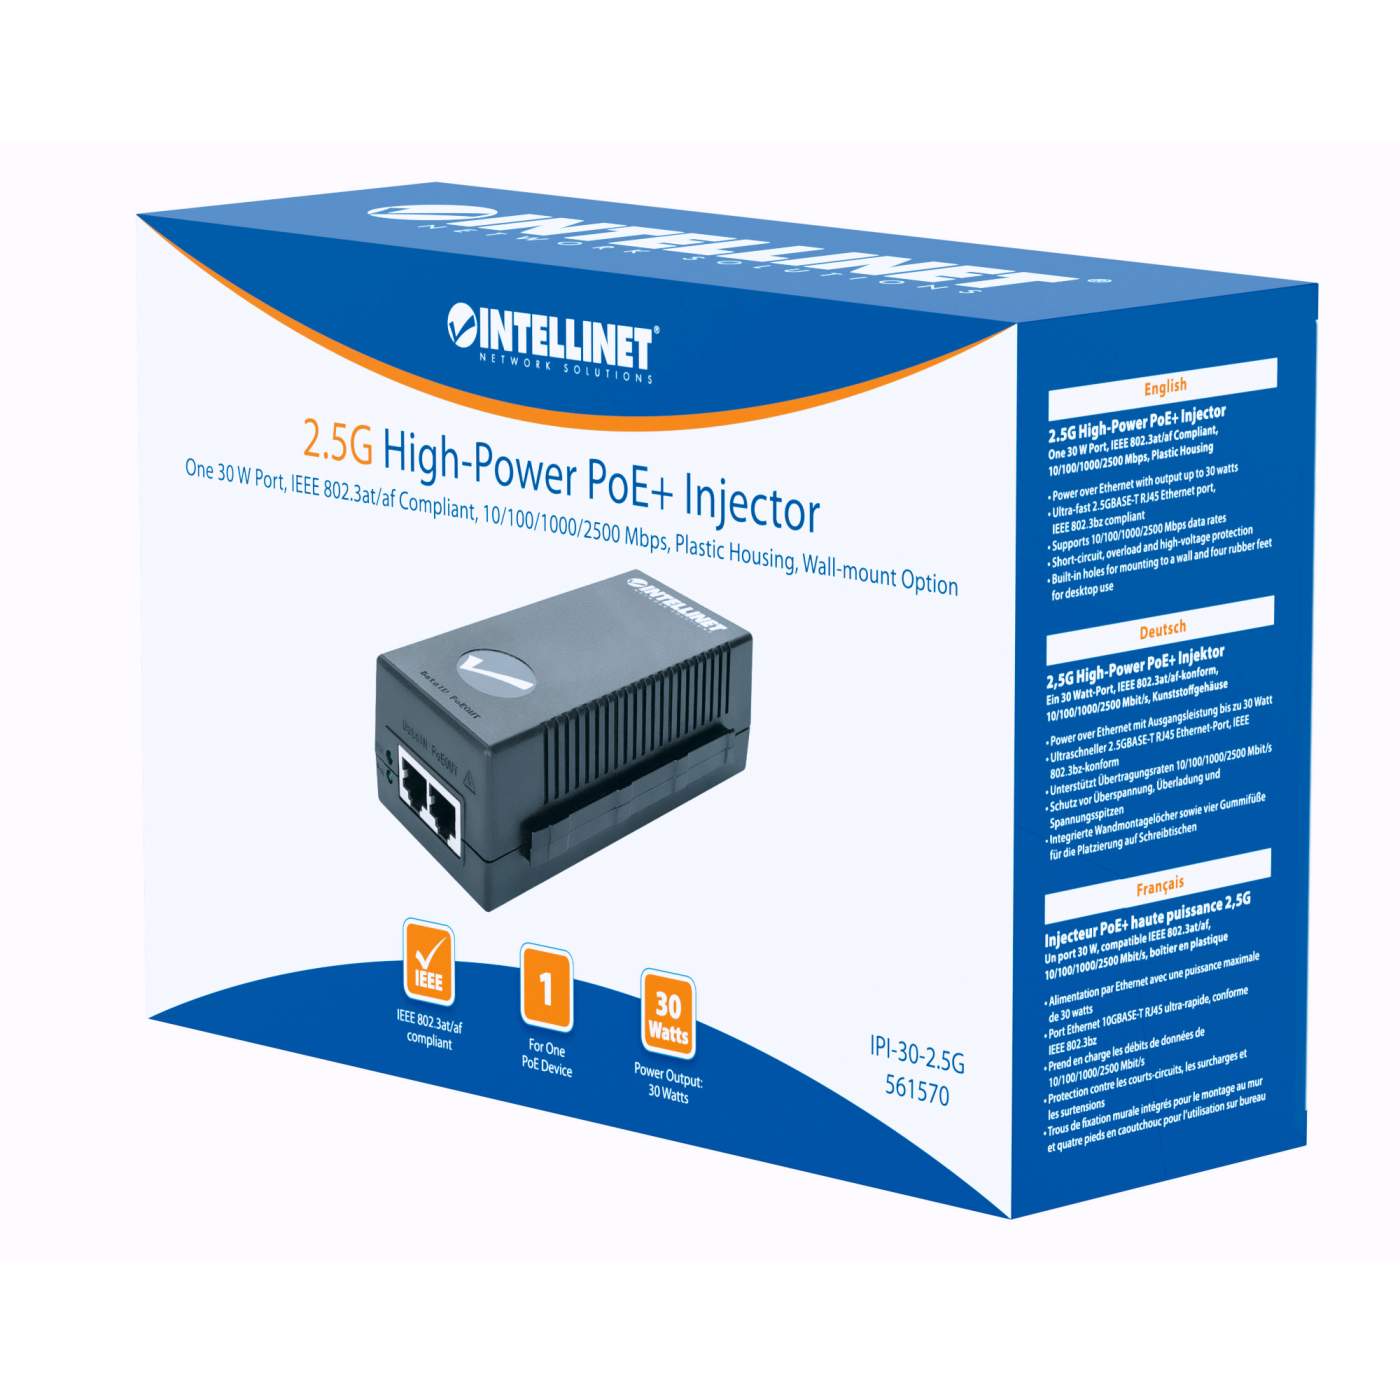 Intellinet 2.5G High-Power PoE+ Injector (561570)